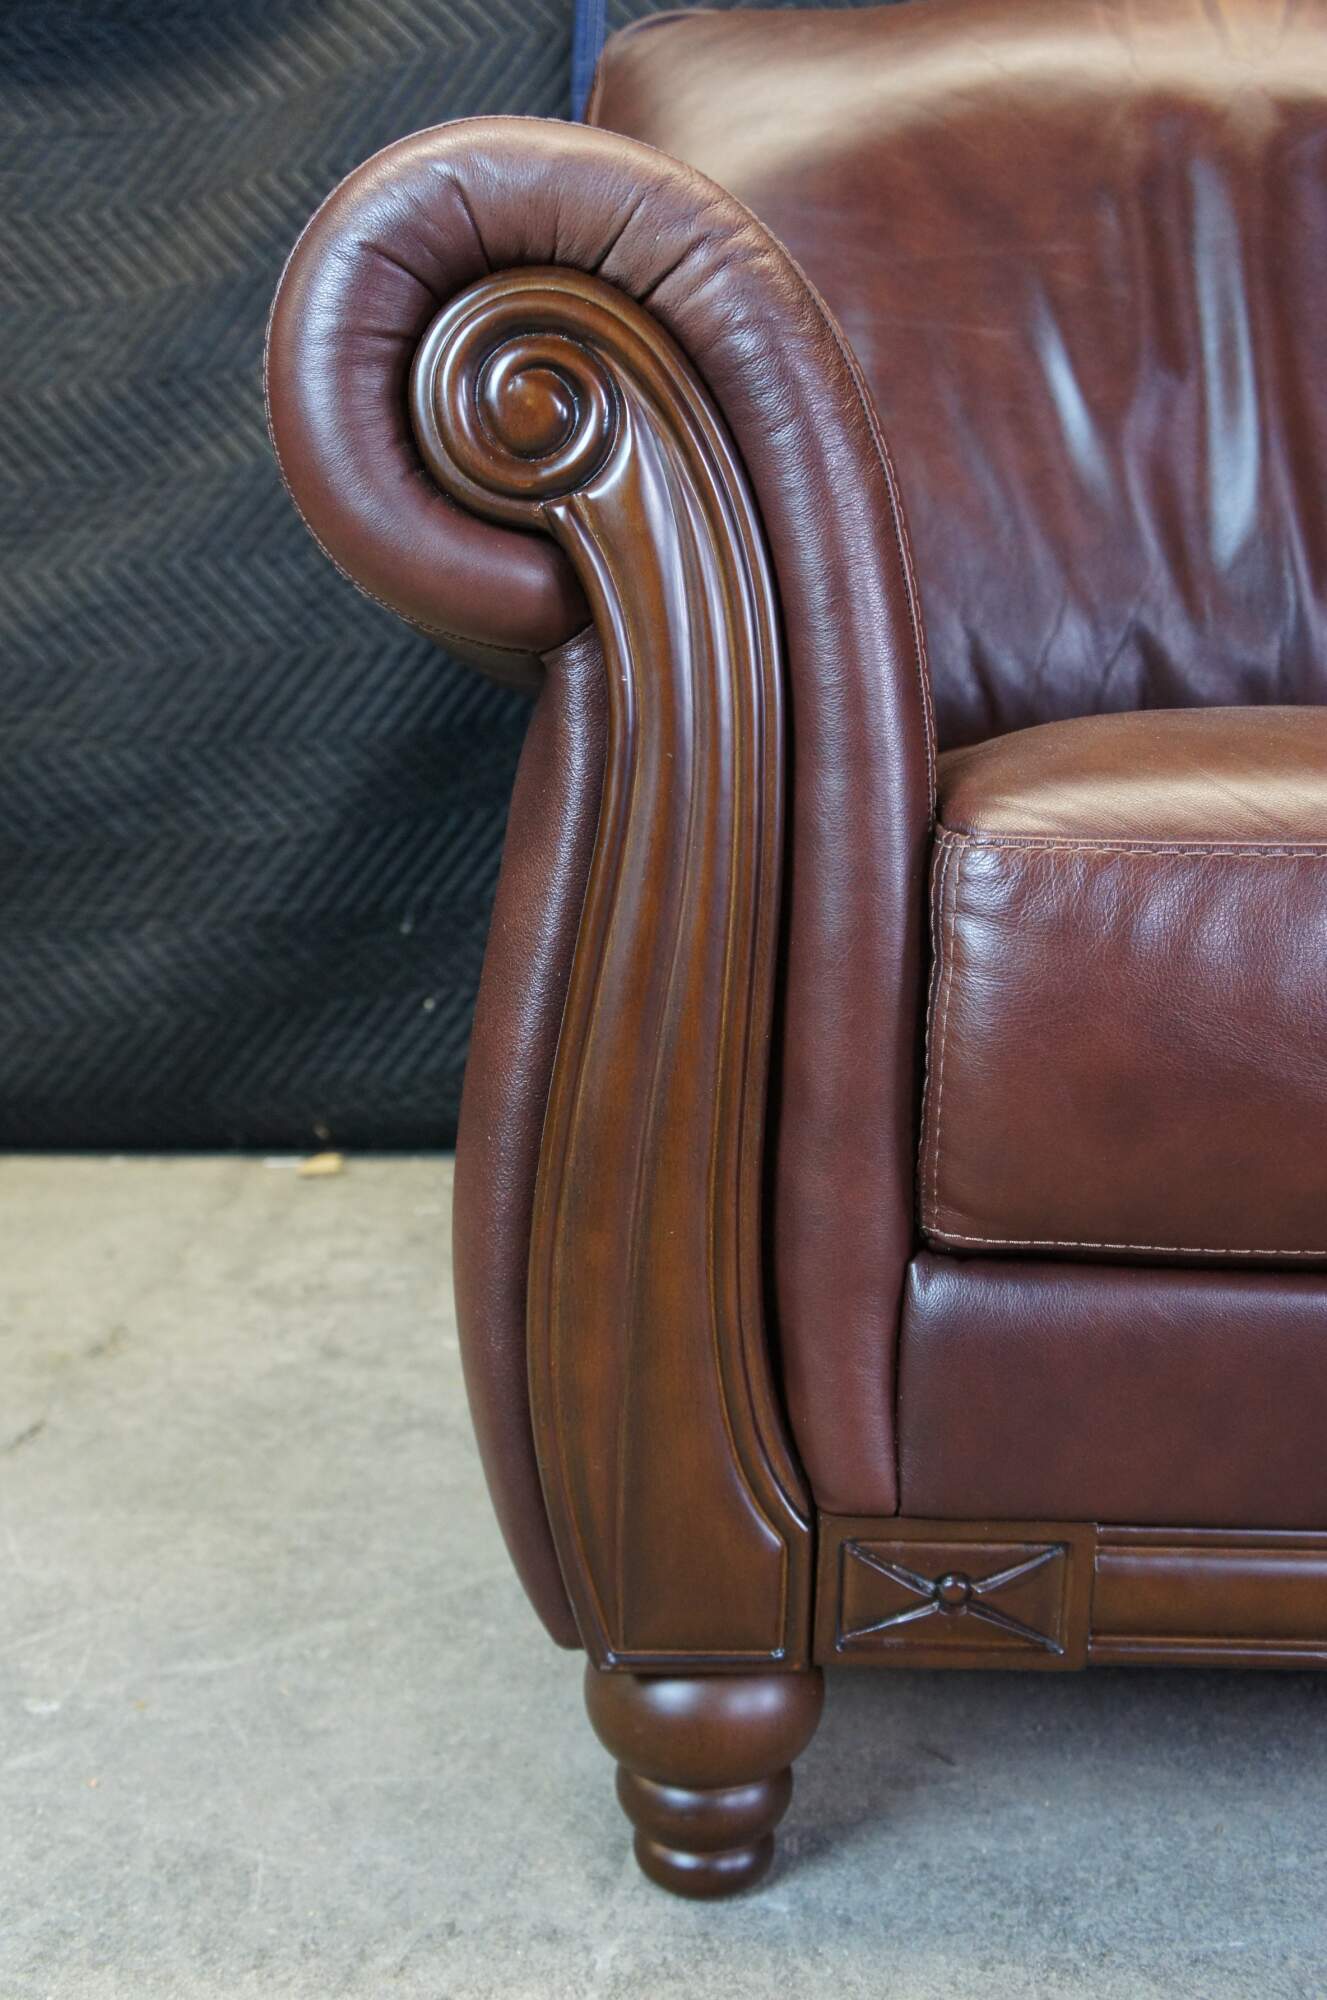 Chateau d'Ax Pillow Arm Recliner Chair, 73% Off